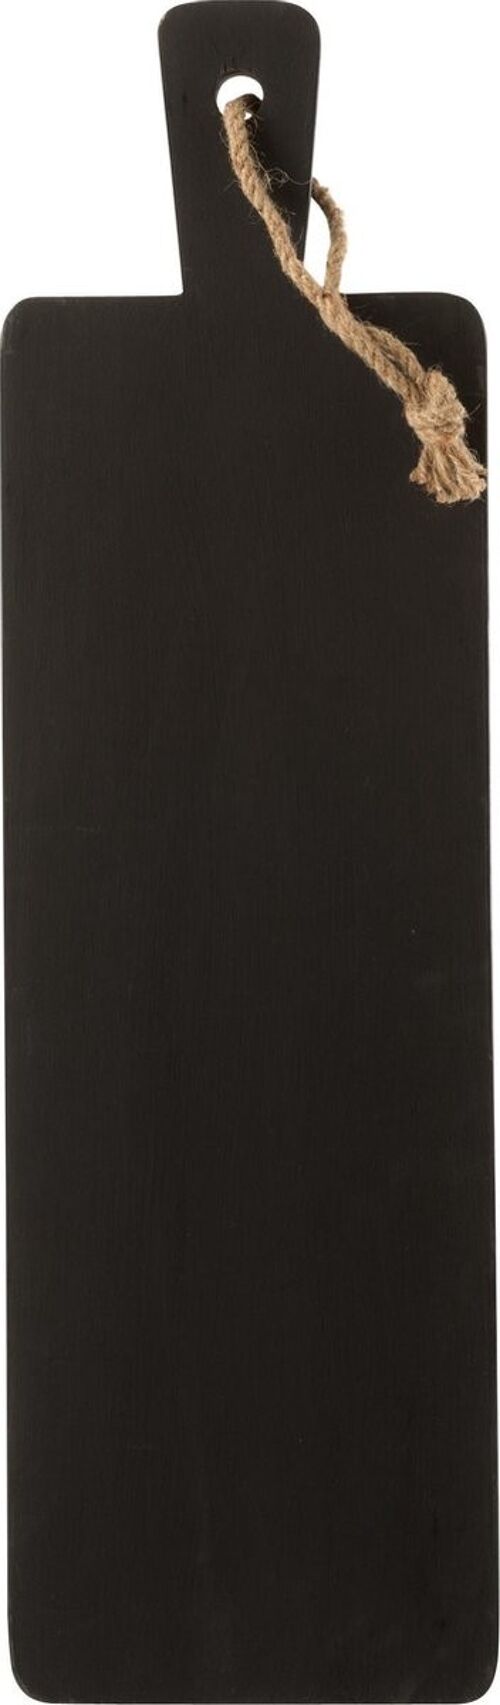 Houten snijplank - Large (zwart)